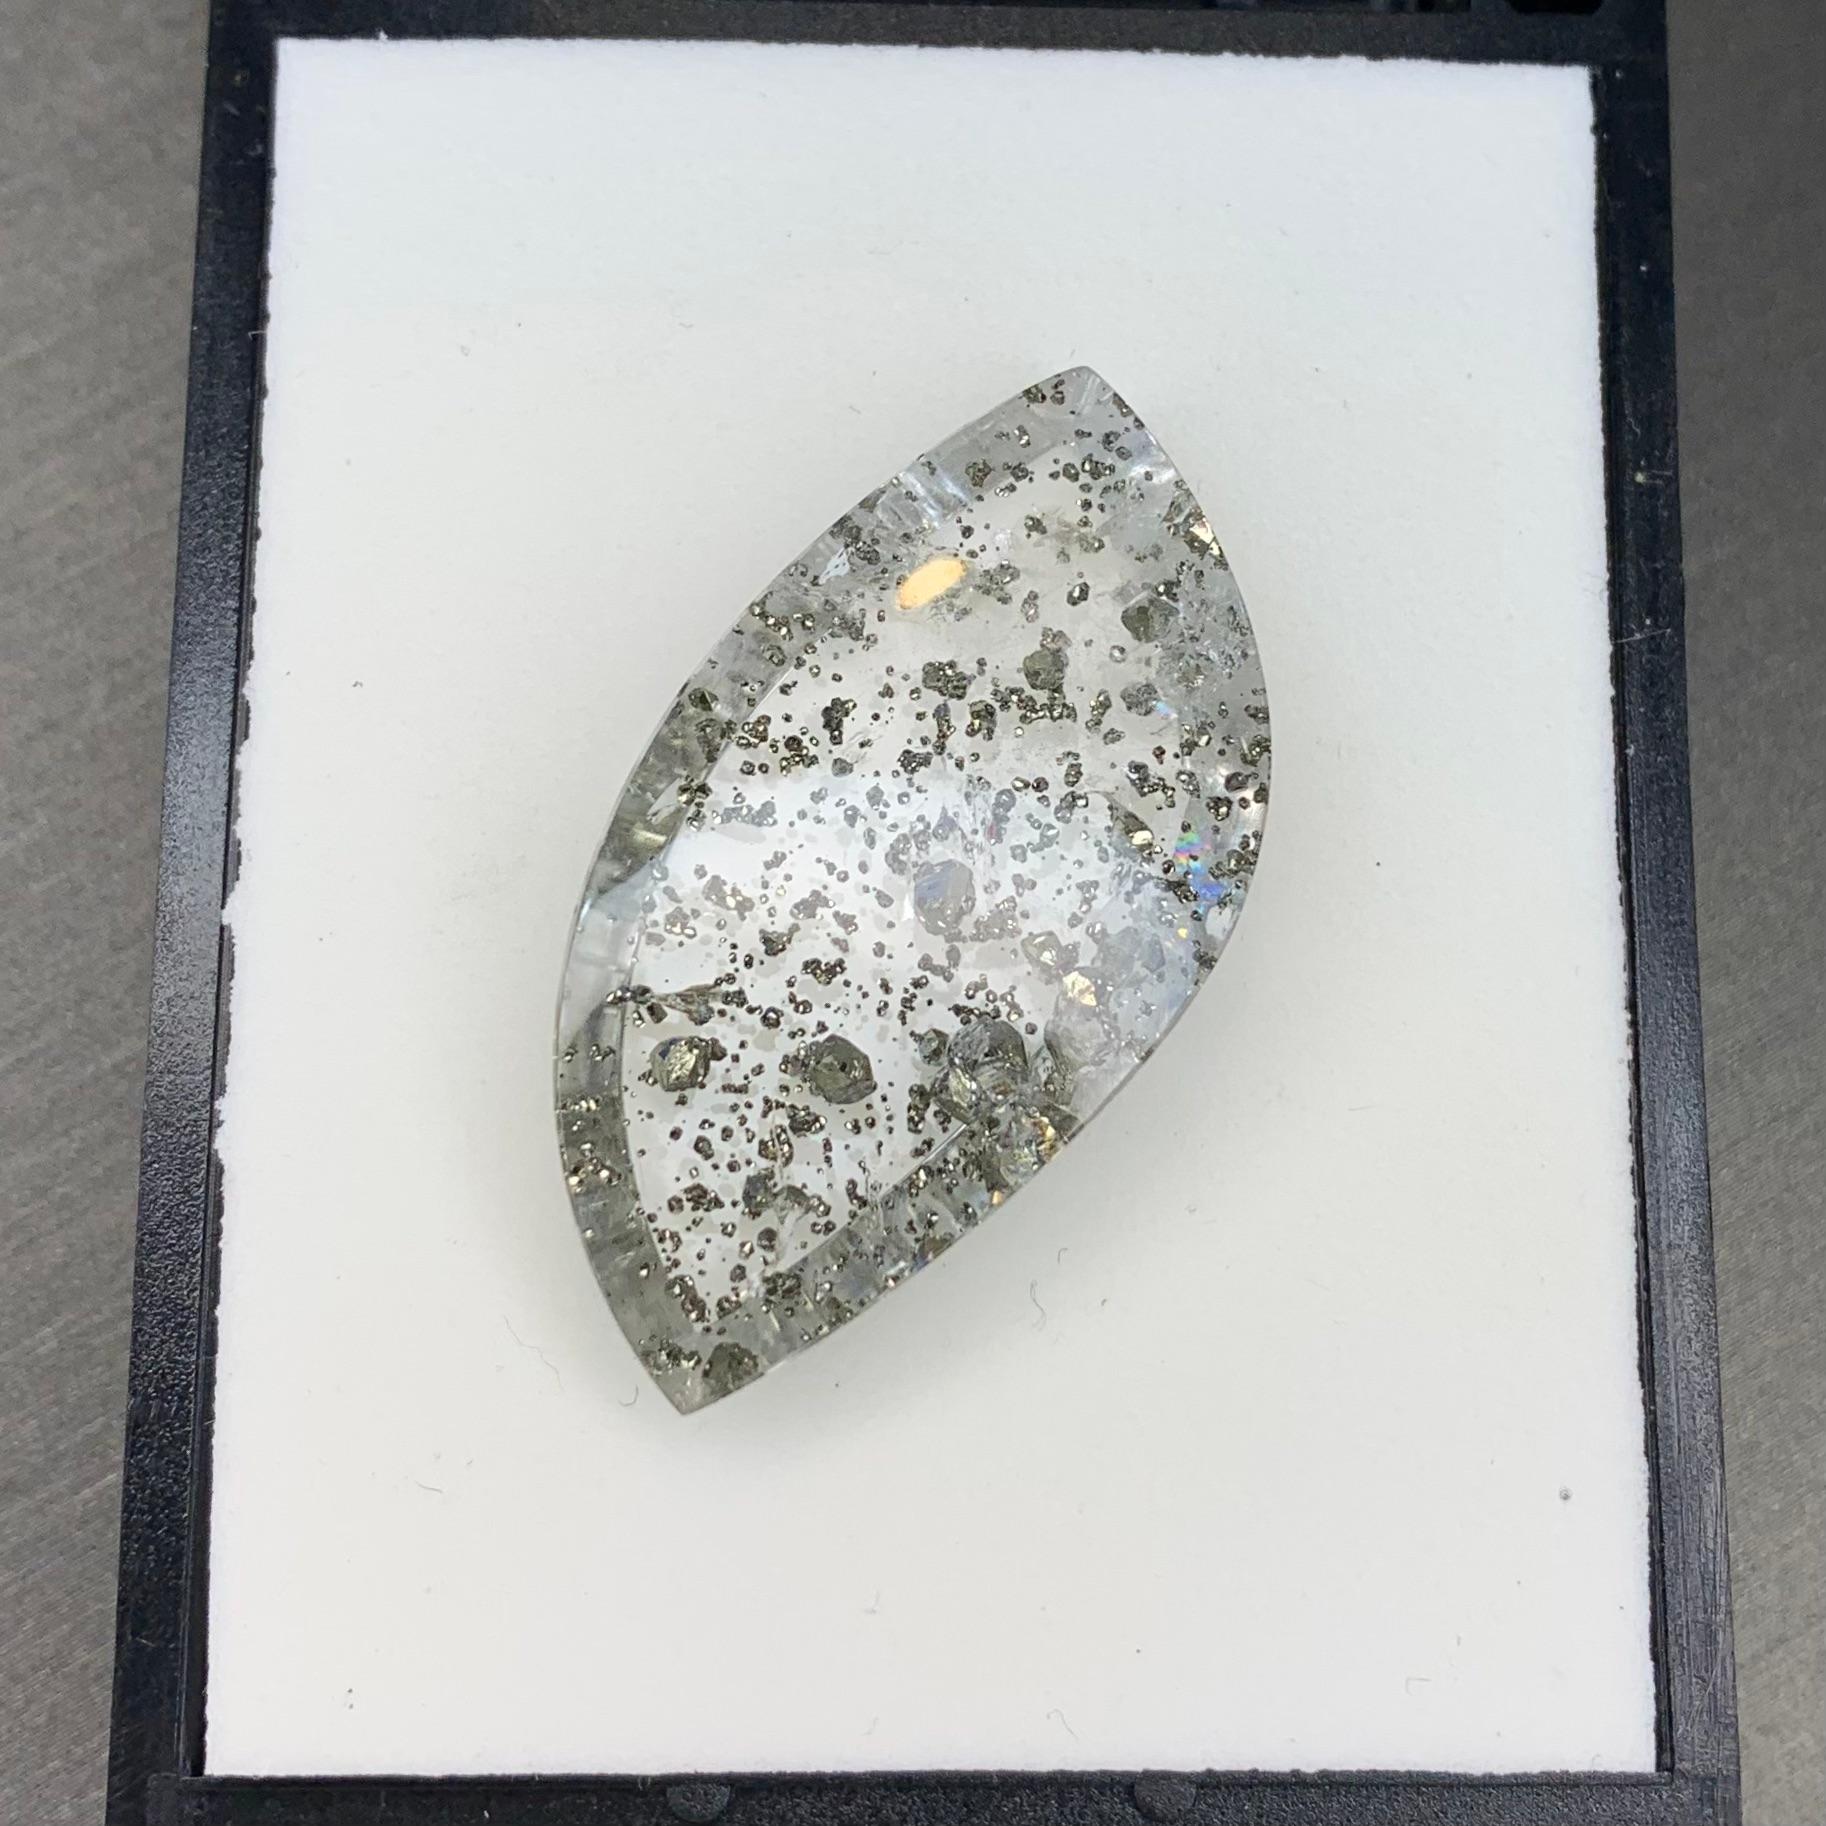 Women's or Men's Leaf-shaped 35.52 carat quartz with pyrite inclusions